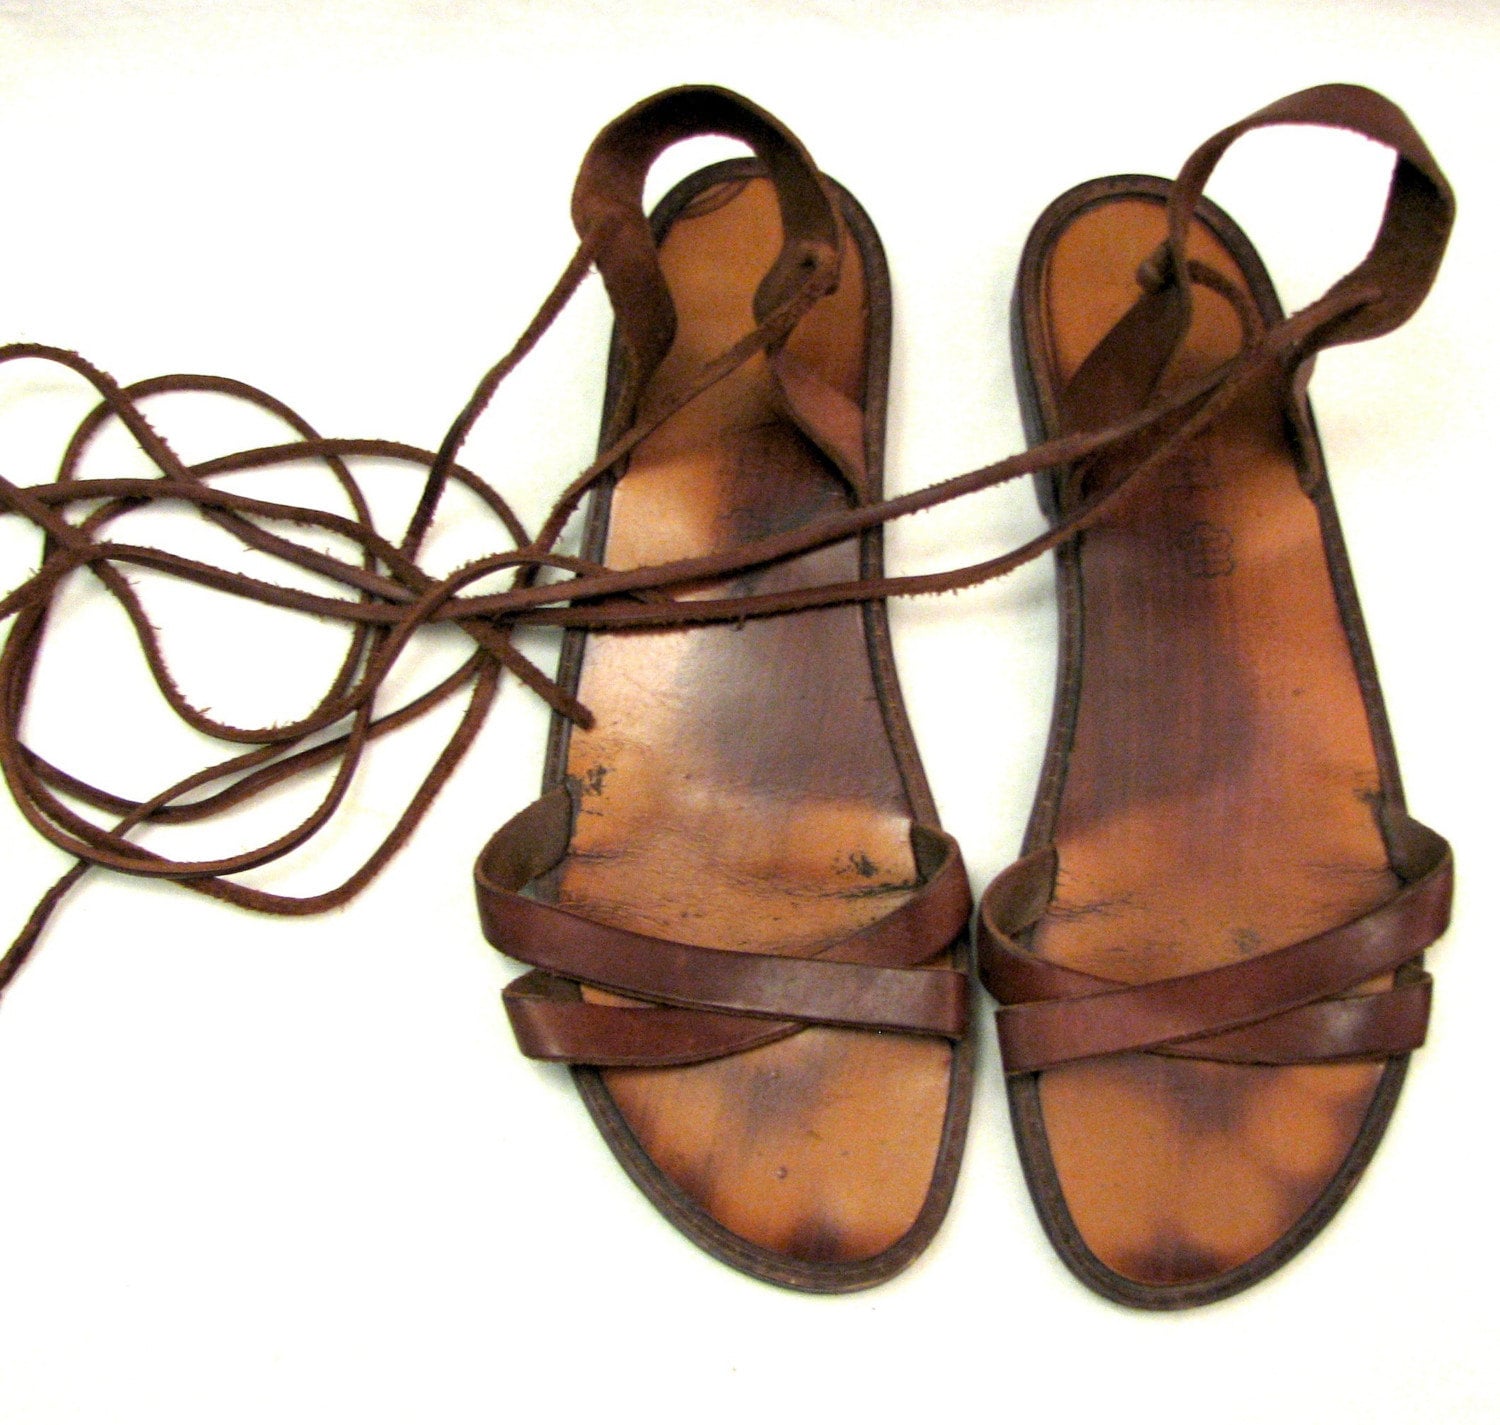 authentic GLADIATOR sandals straps wrap up calf by 20twentyvintage